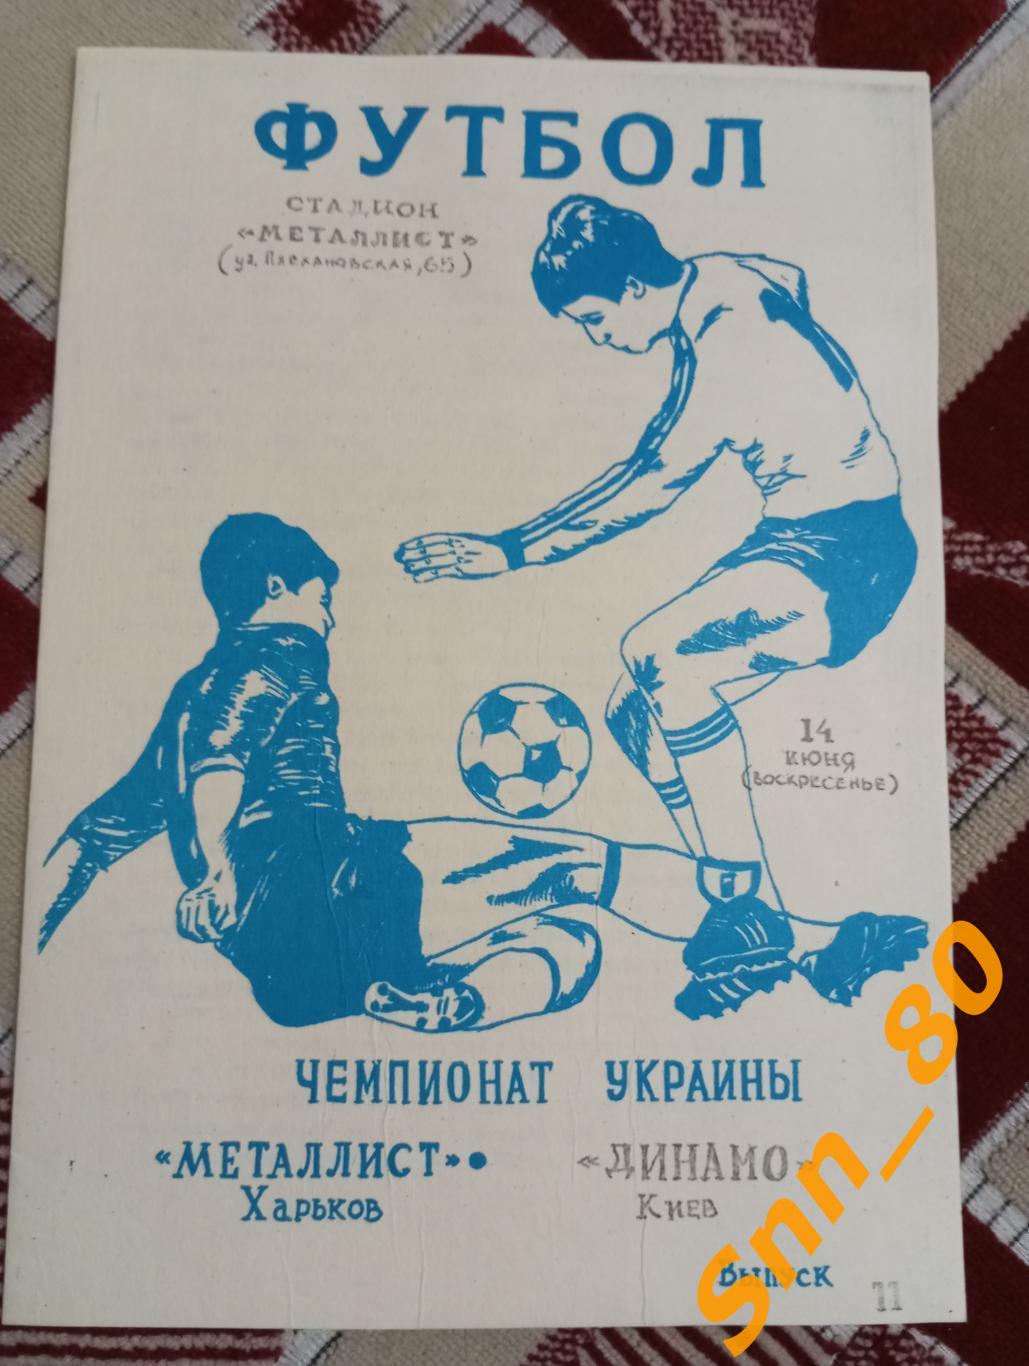 Металлист Харьков - Динамо Киев 14.06.1992 2-й вид